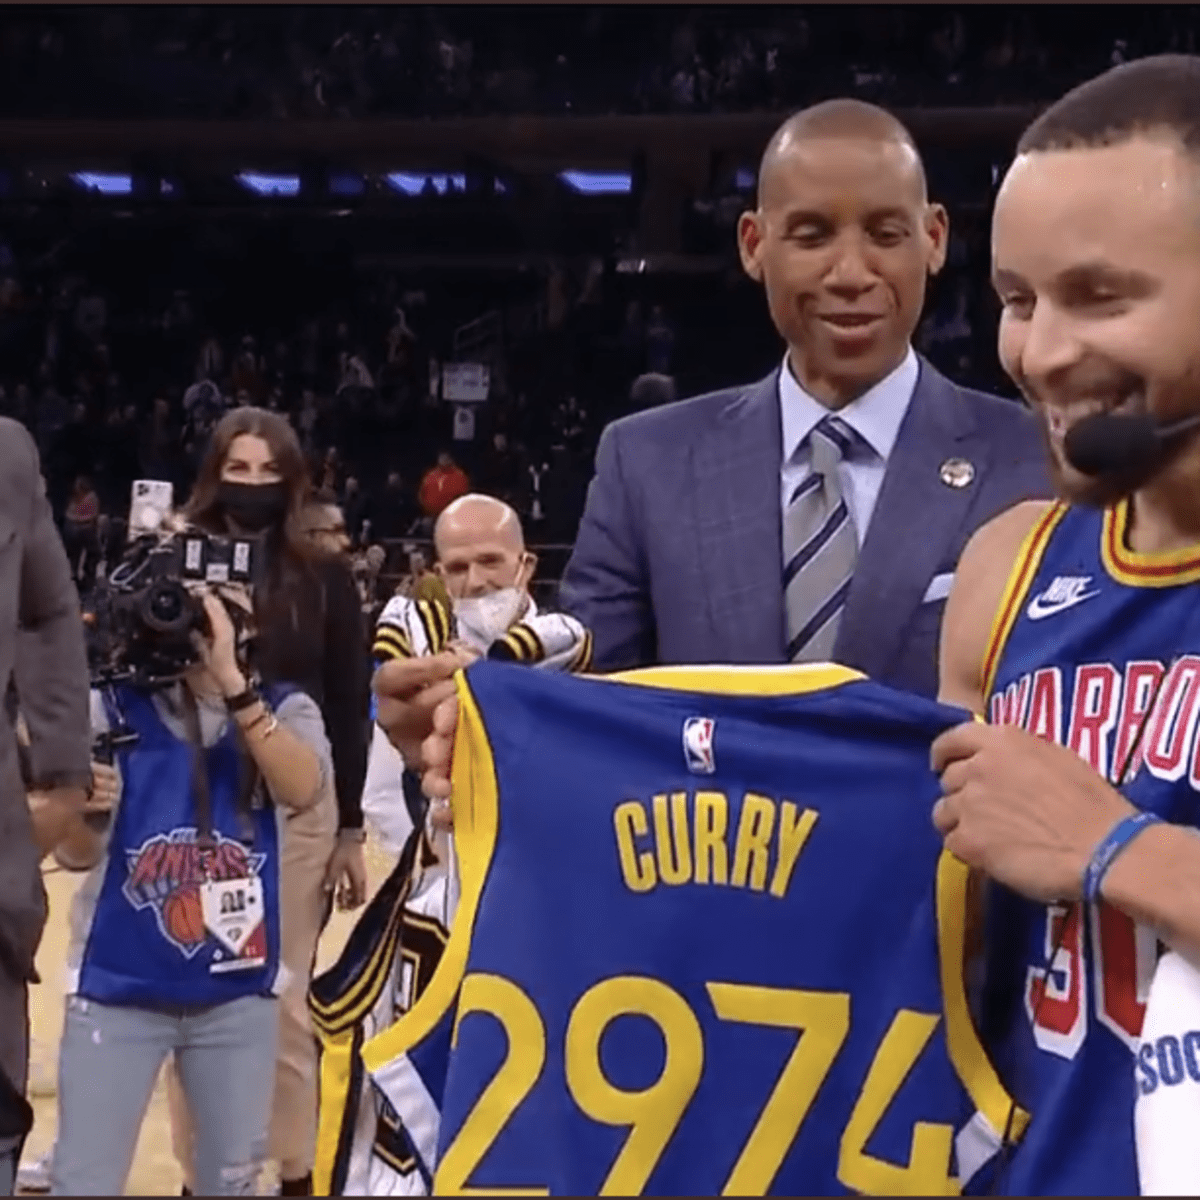 Steph Curry All-Time 3-PT scorer 2,974 T-shirt, Long sleeve